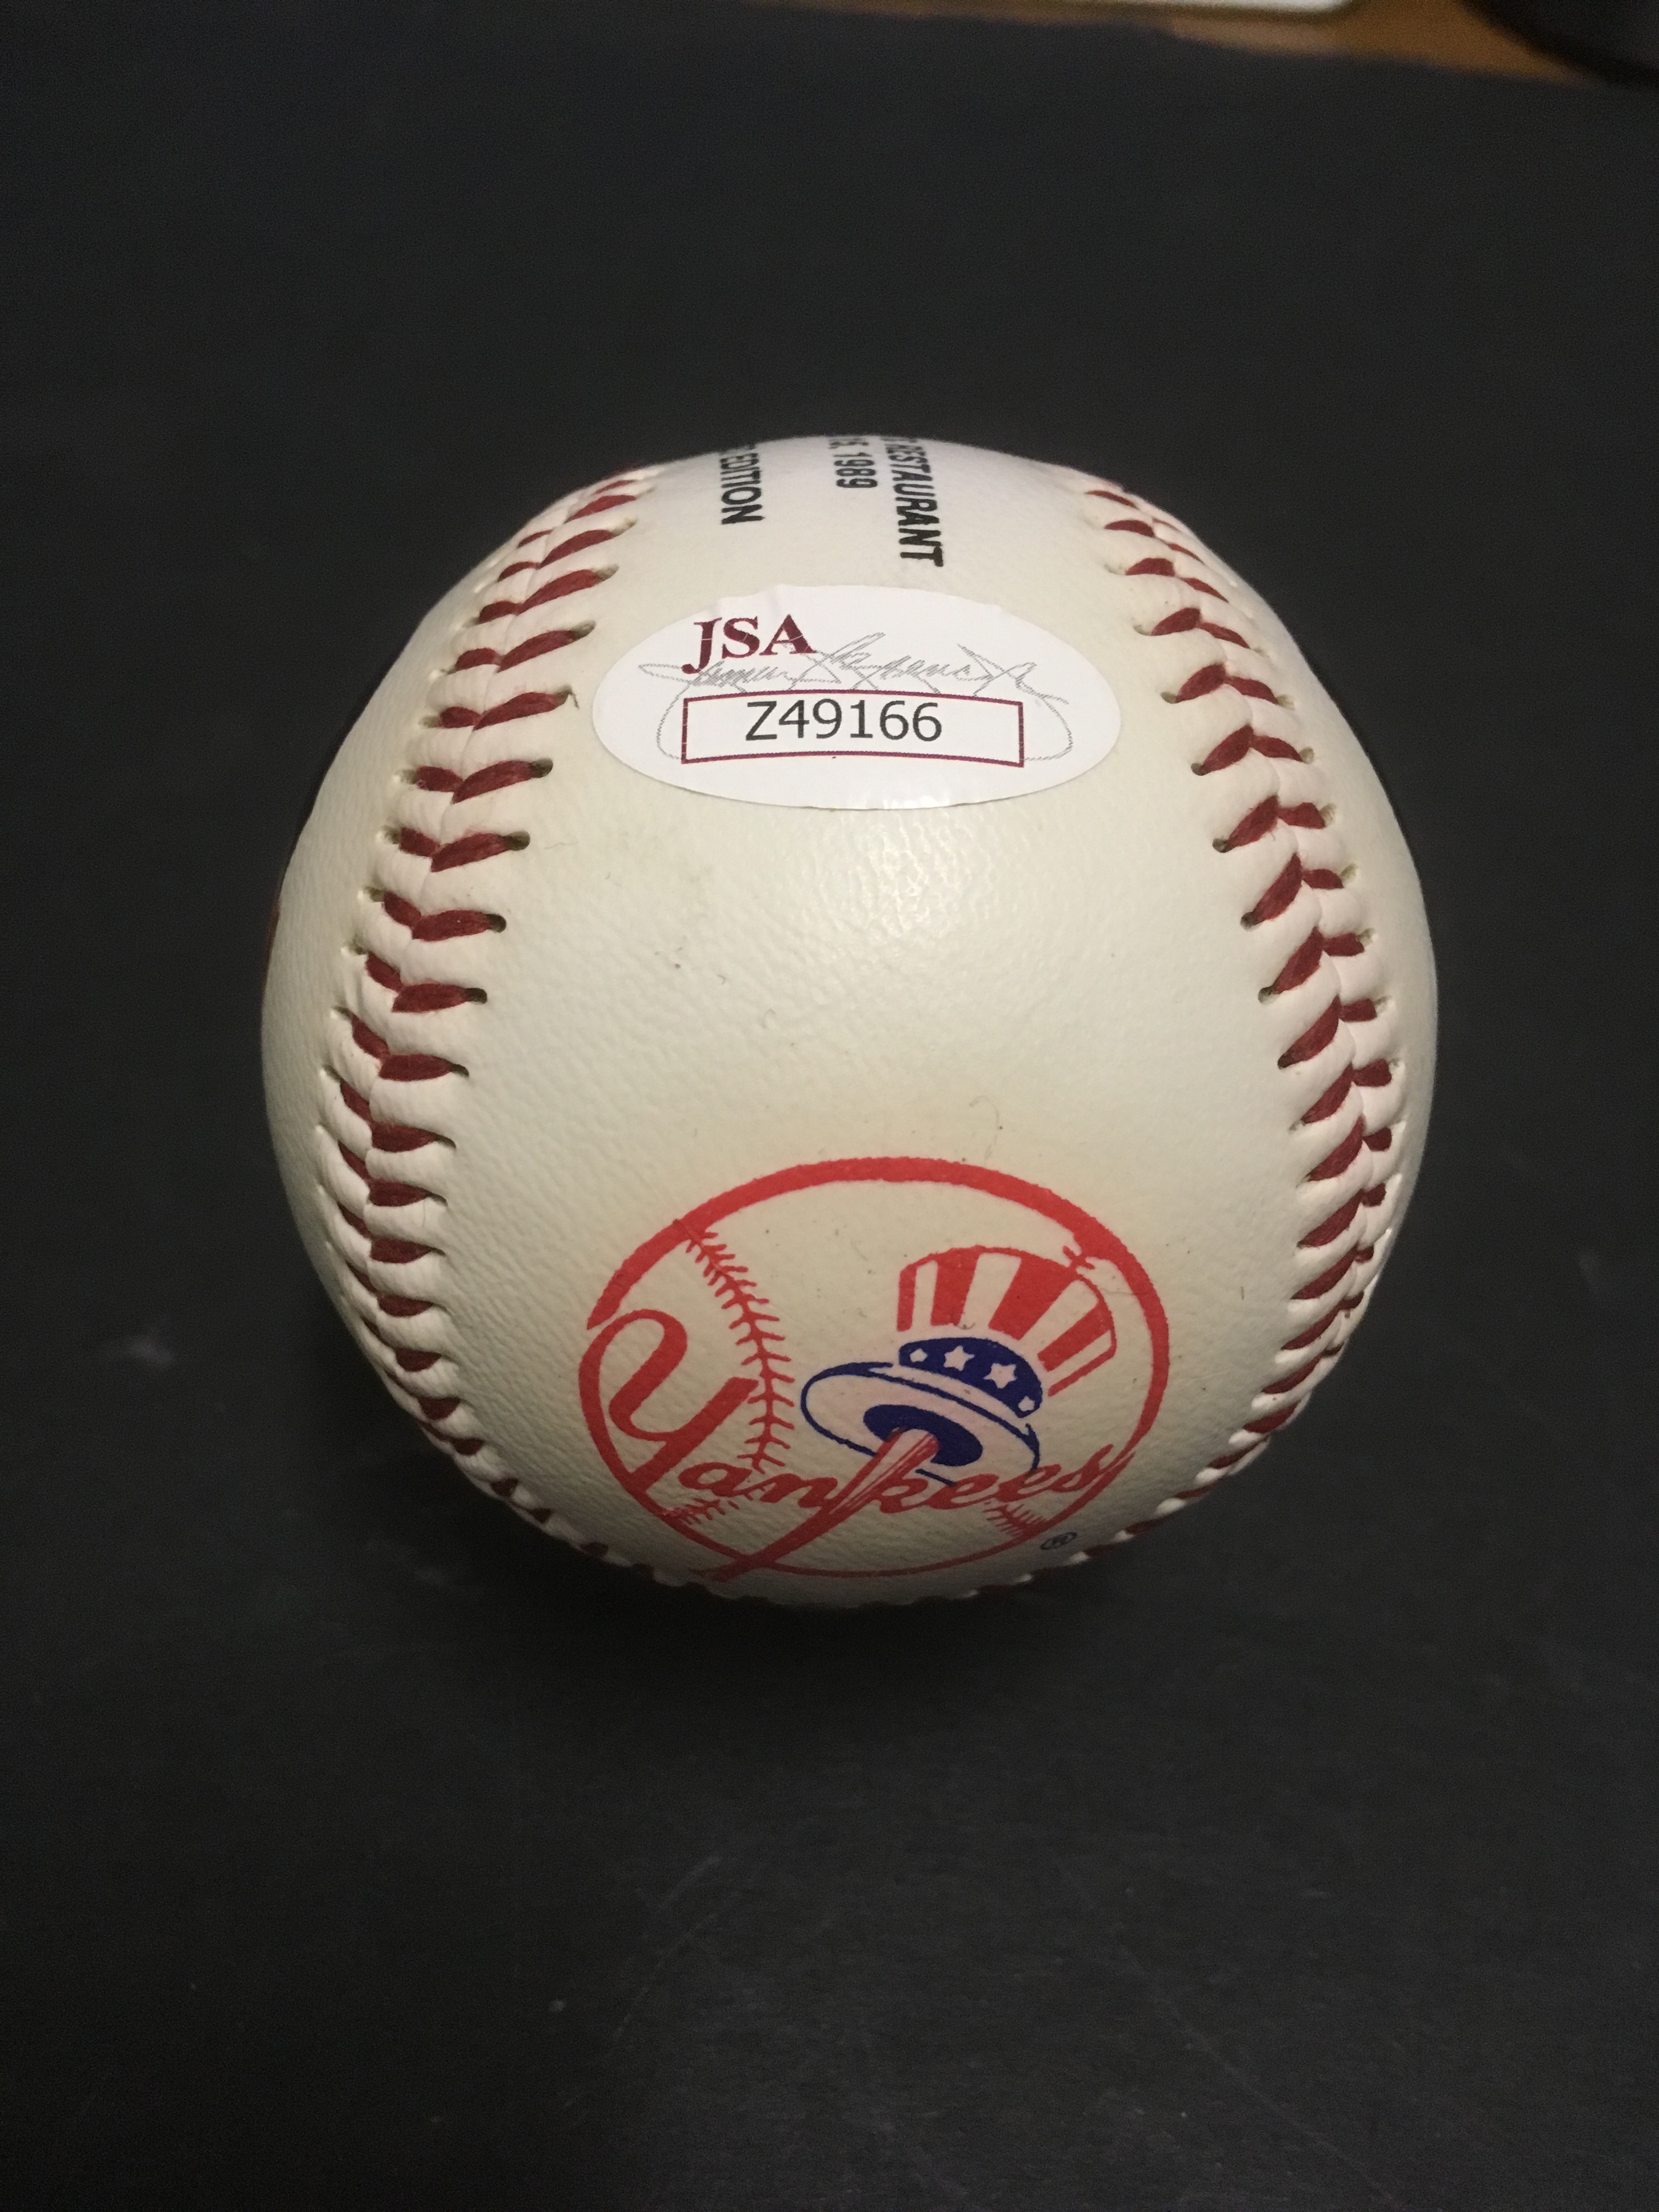 Dodgers Marlins JSA Certified Don Mattingly Autographed Ball Autographed Baseballs OAL !